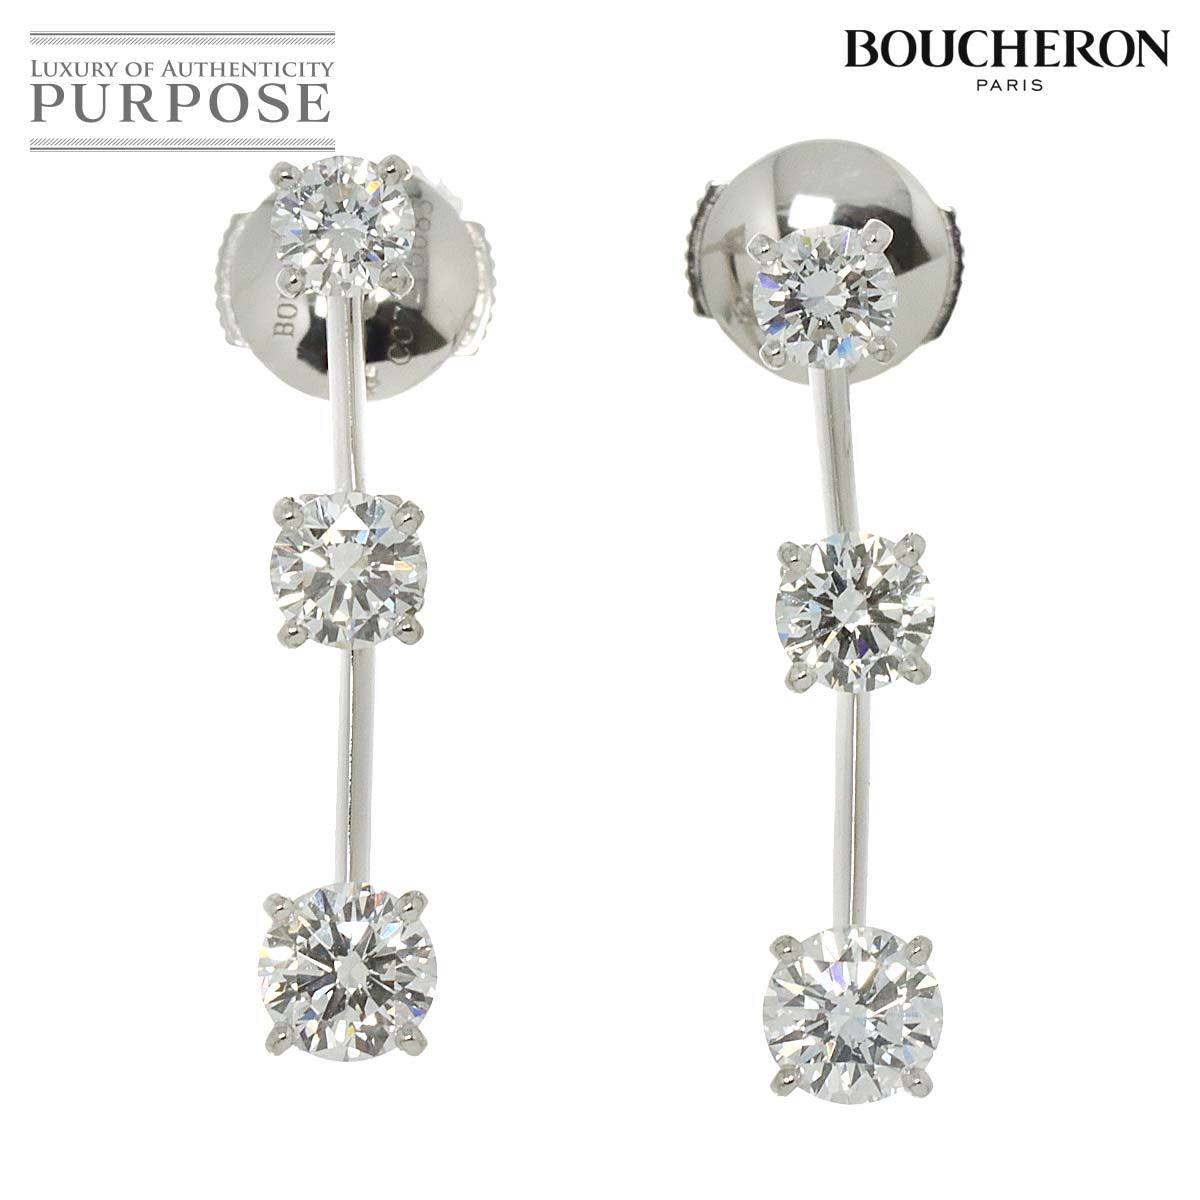  Boucheron BOUCHERON серьги с бриллиантами Pt платина K18 WG белое золото 750 Diamonds Earrings Pierced 90213781